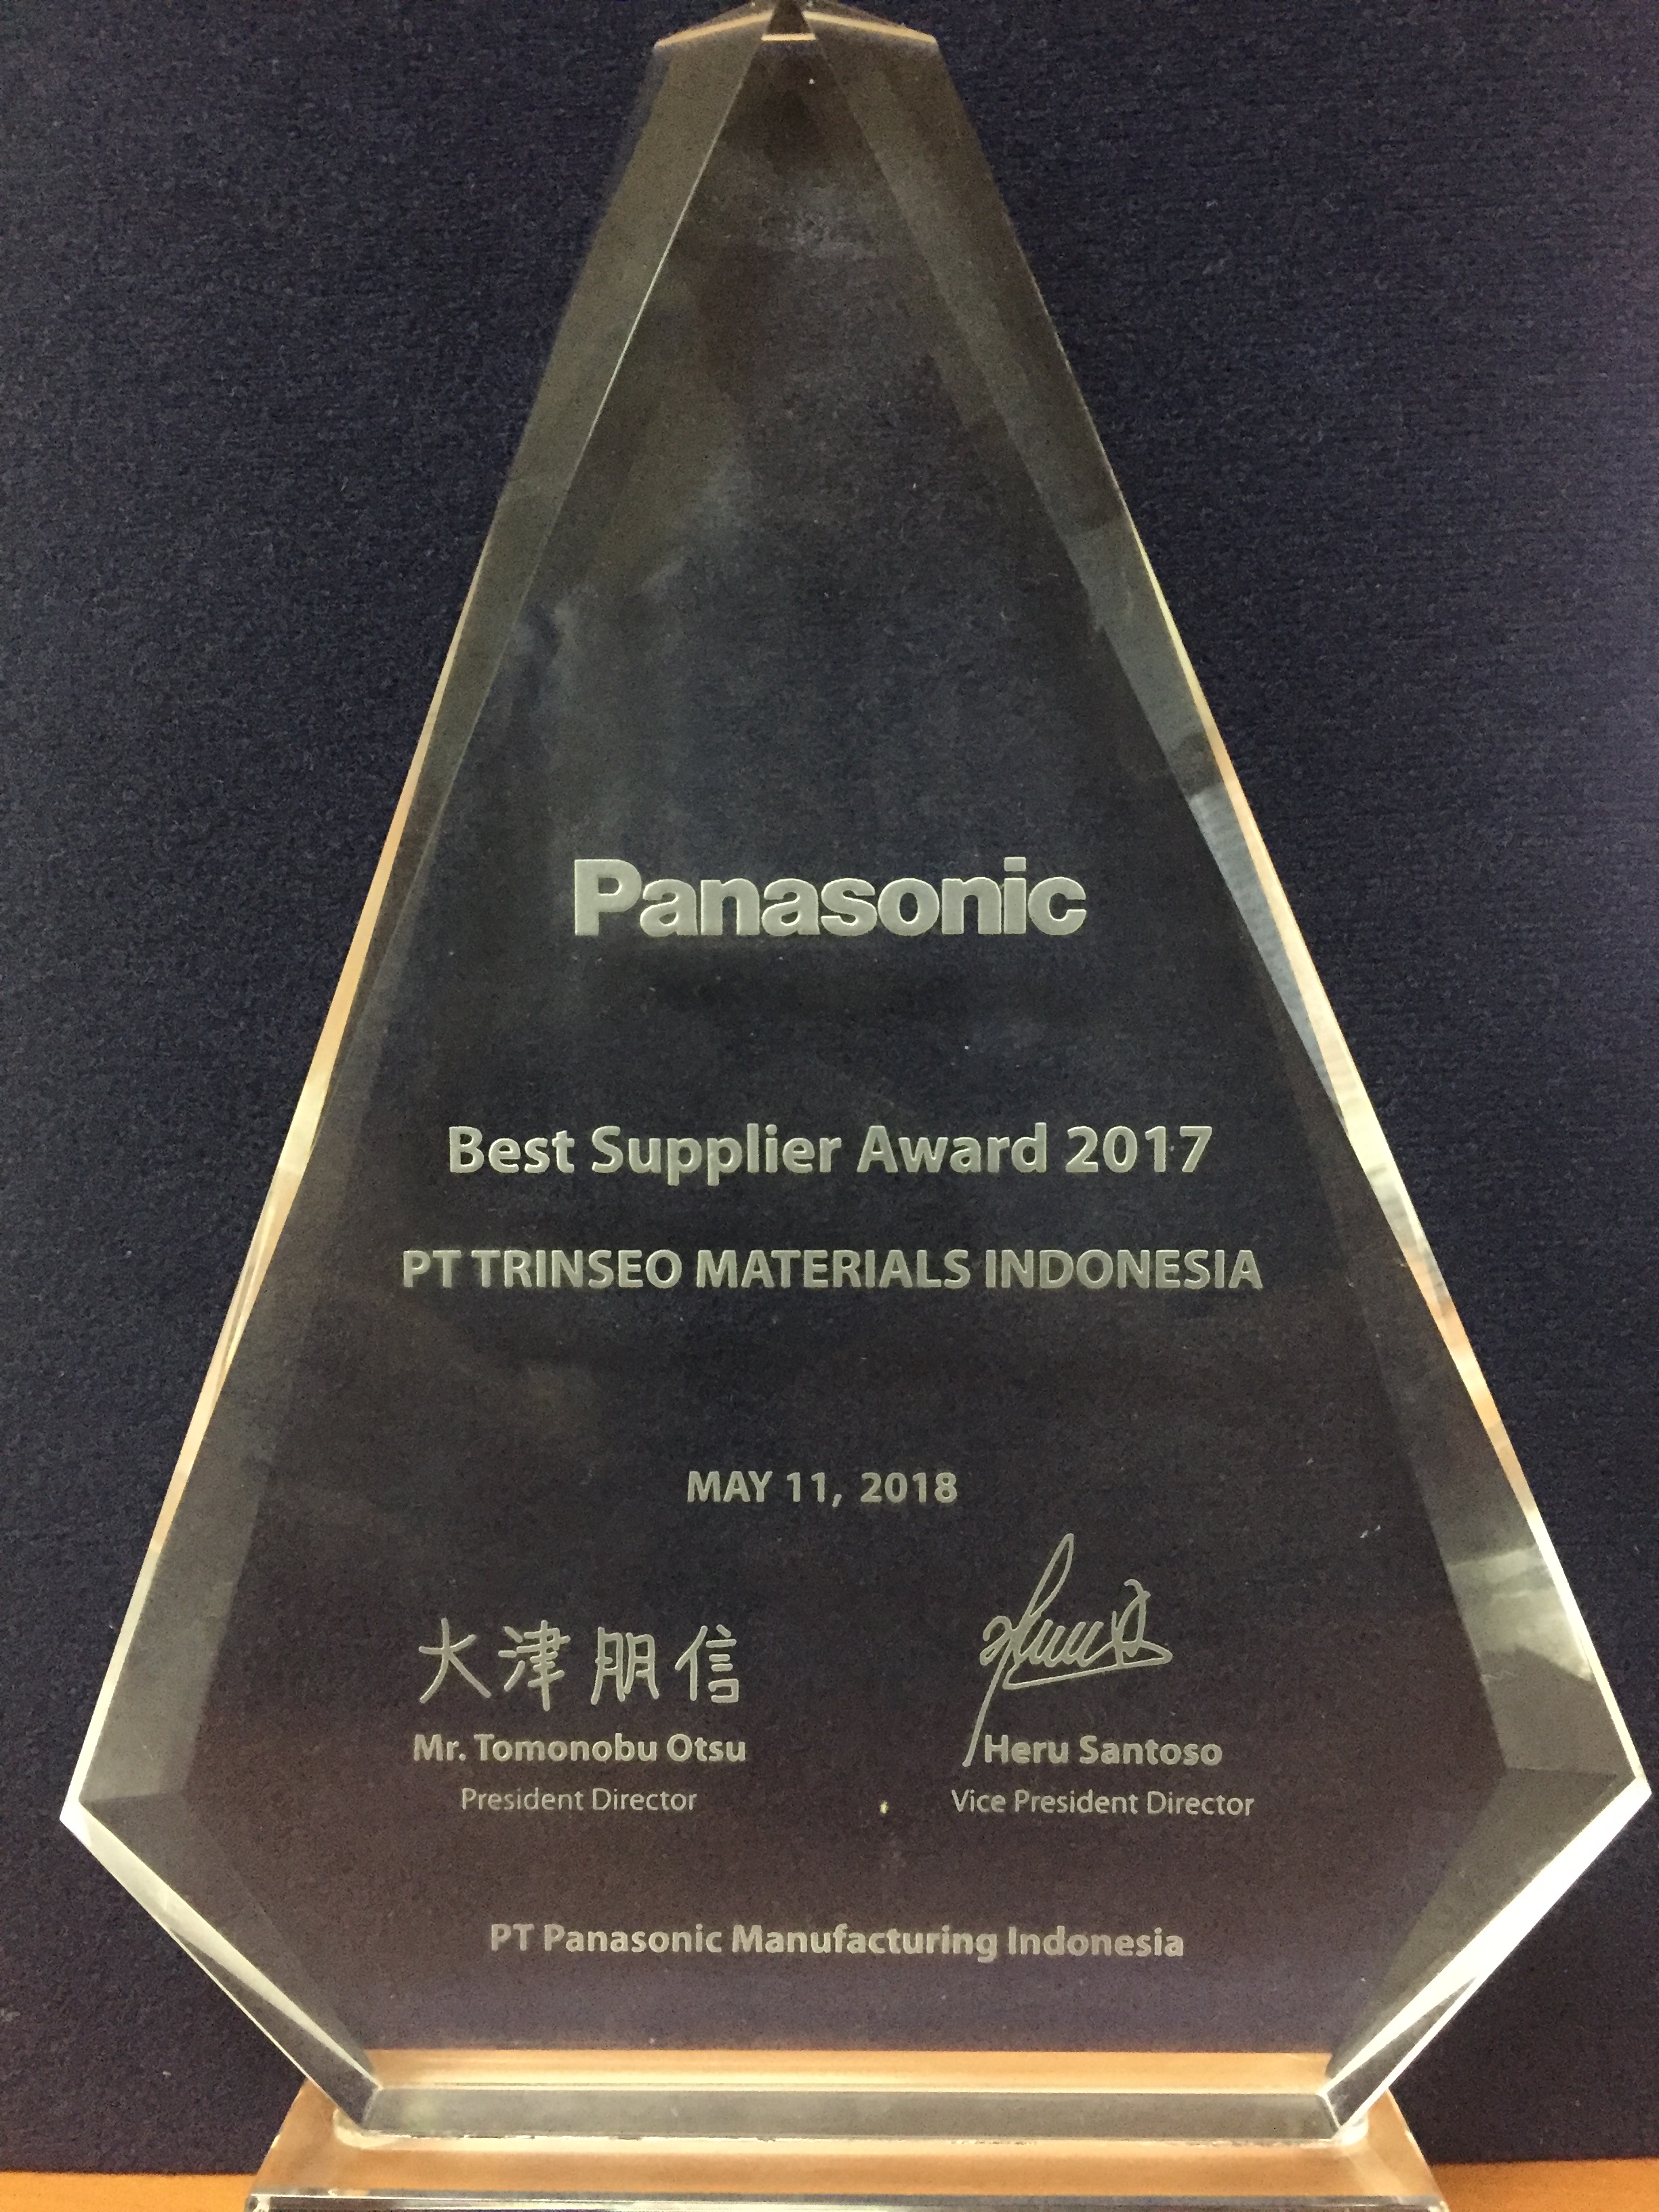 Best Supplier Award 2017 from Panasonic